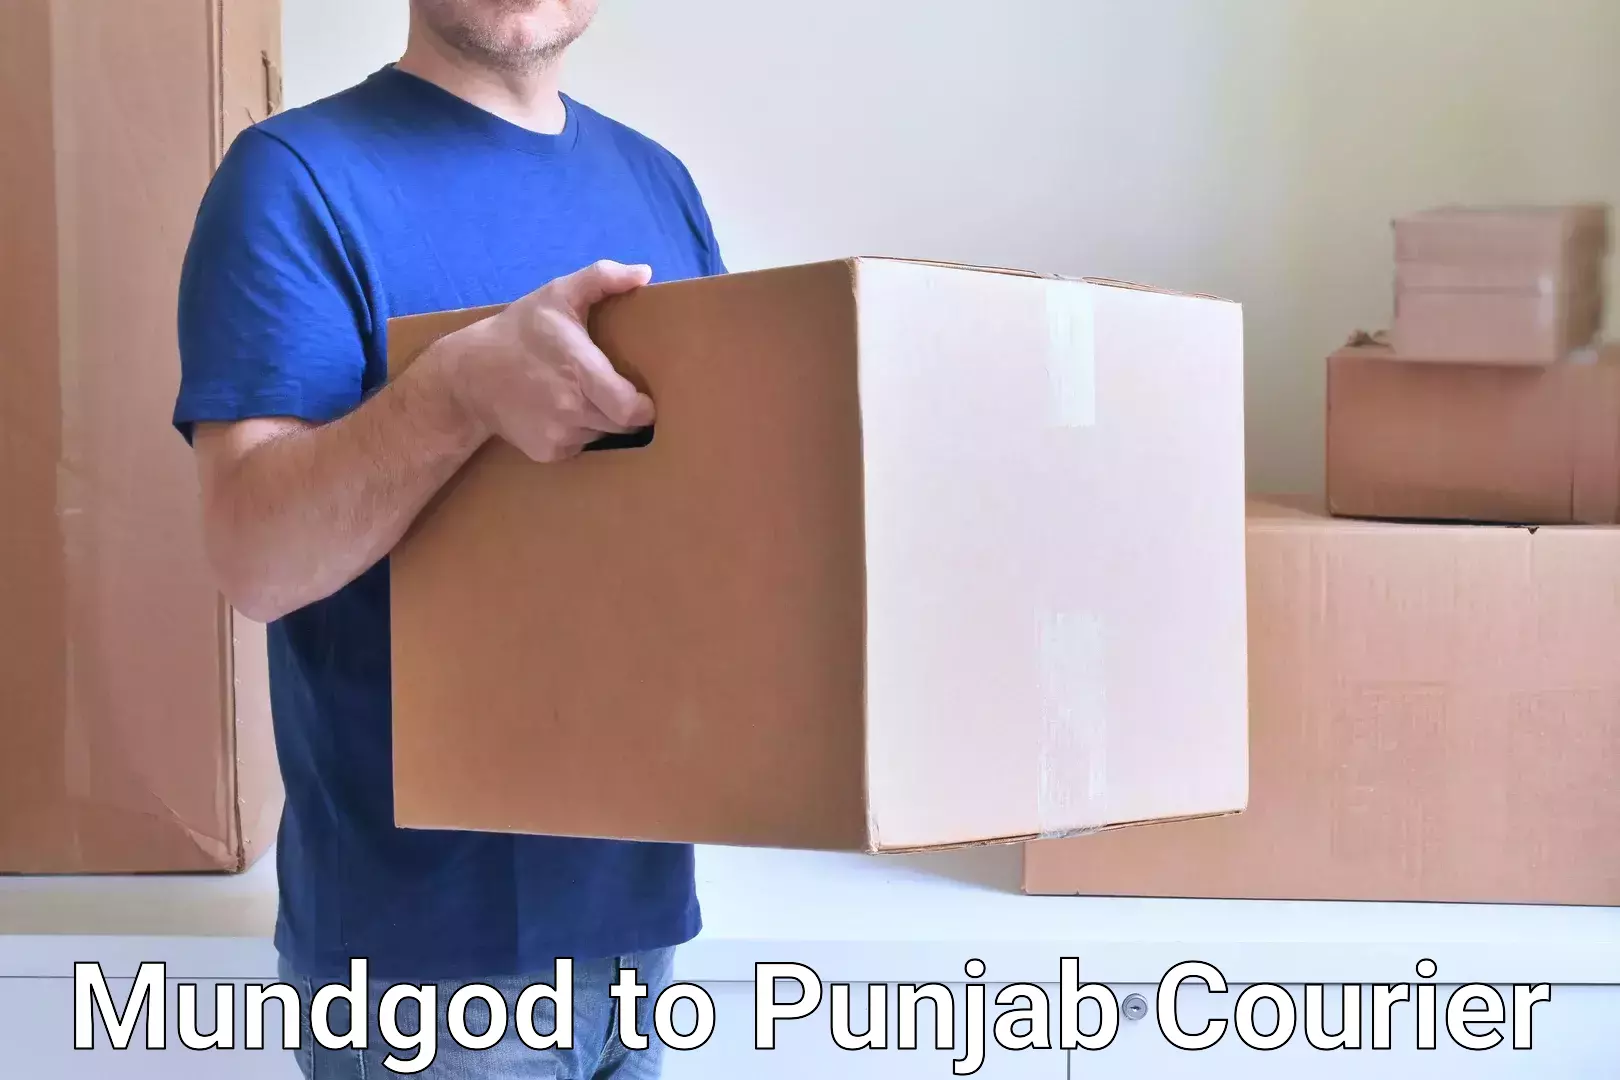 Courier service partnerships Mundgod to Pathankot